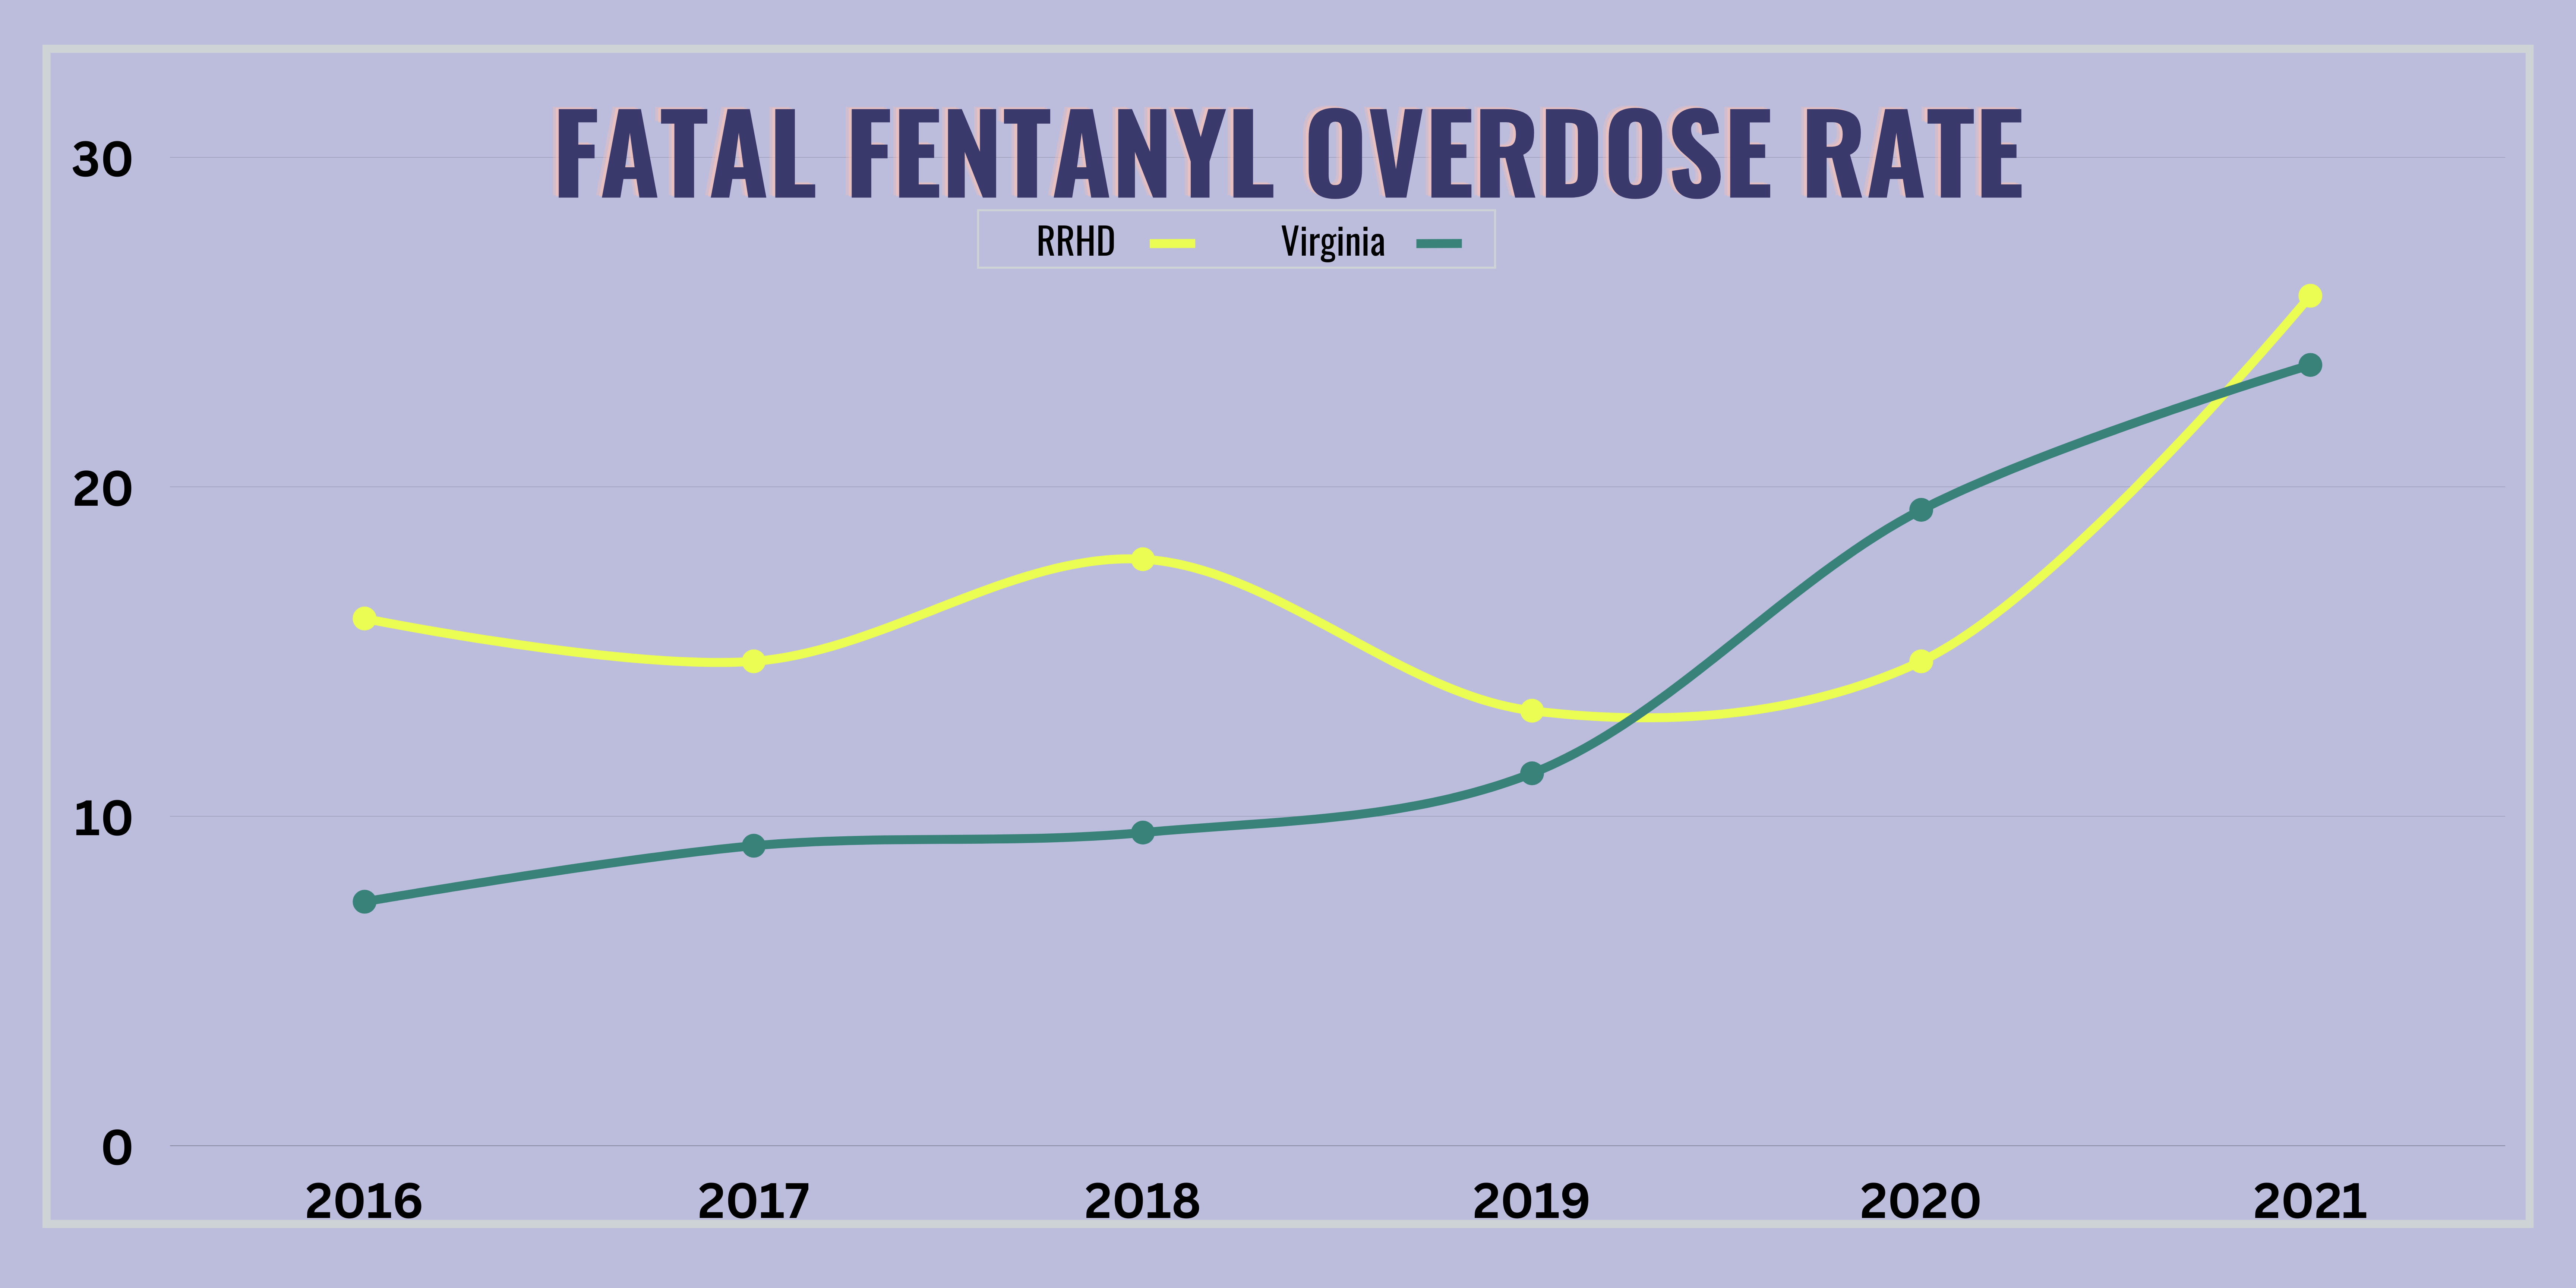 Fatal Fentanyl Overdose Rate Graph 
Increasing fatal fentanyl overdose rate.